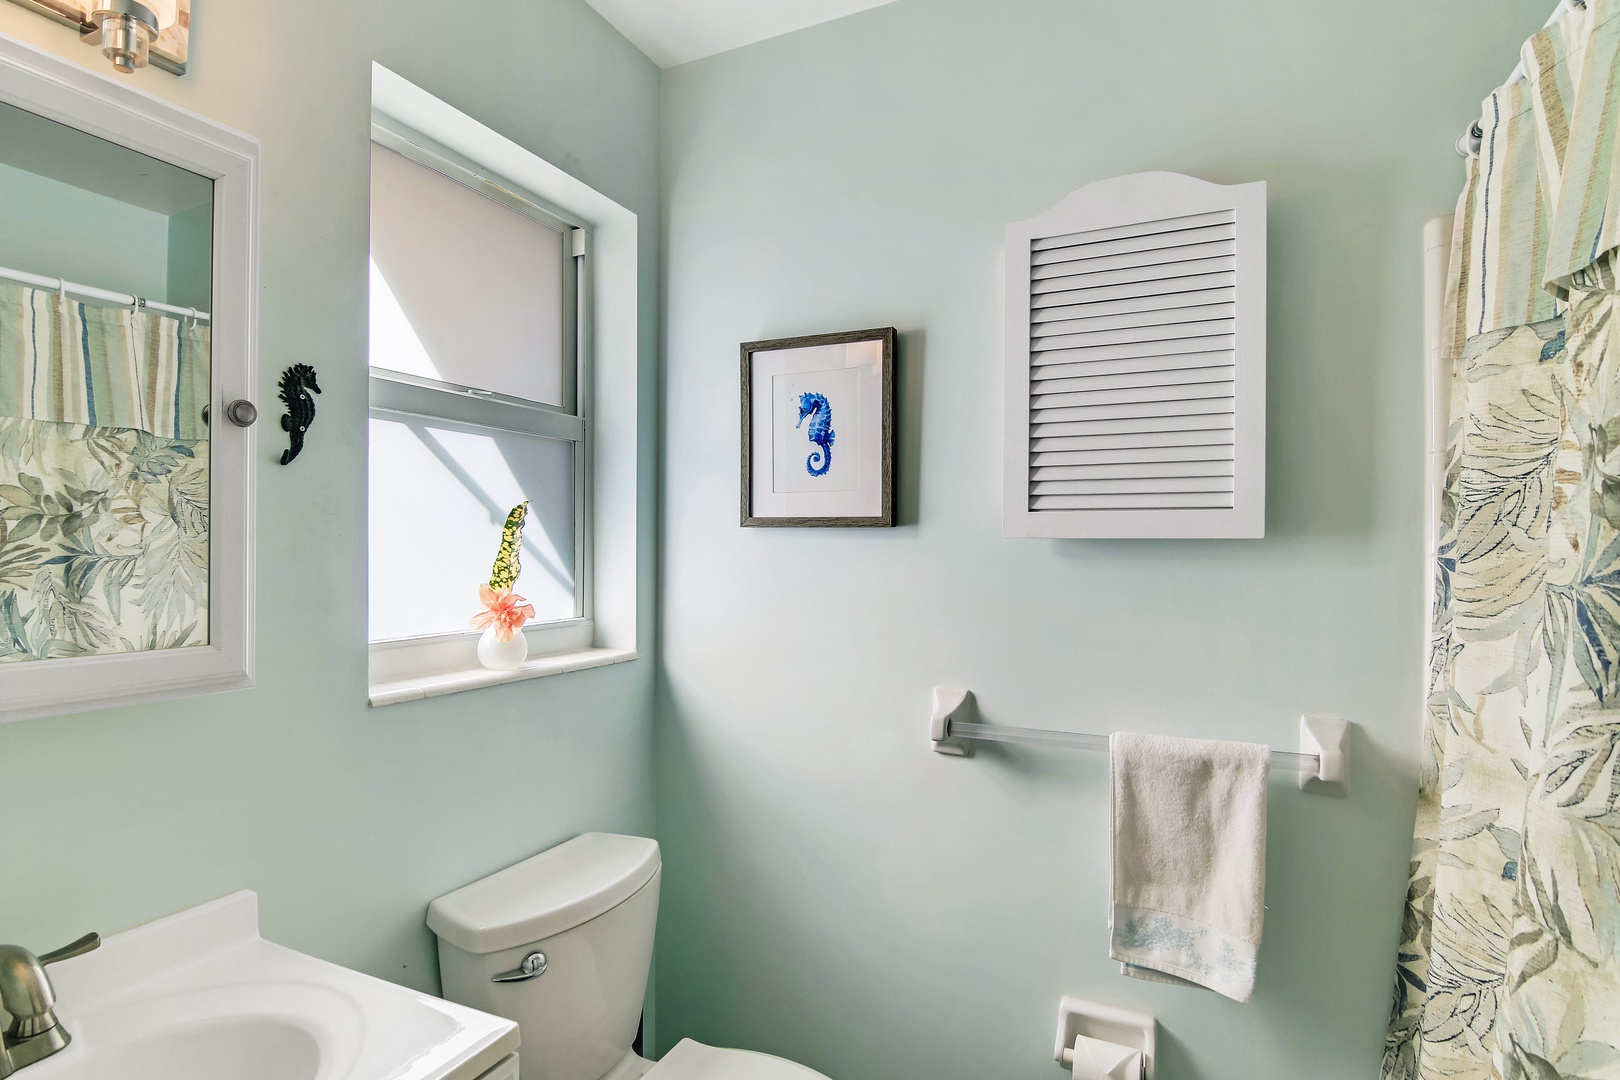 A single vanity & shower/tub combo await in this serene ensuite bathroom